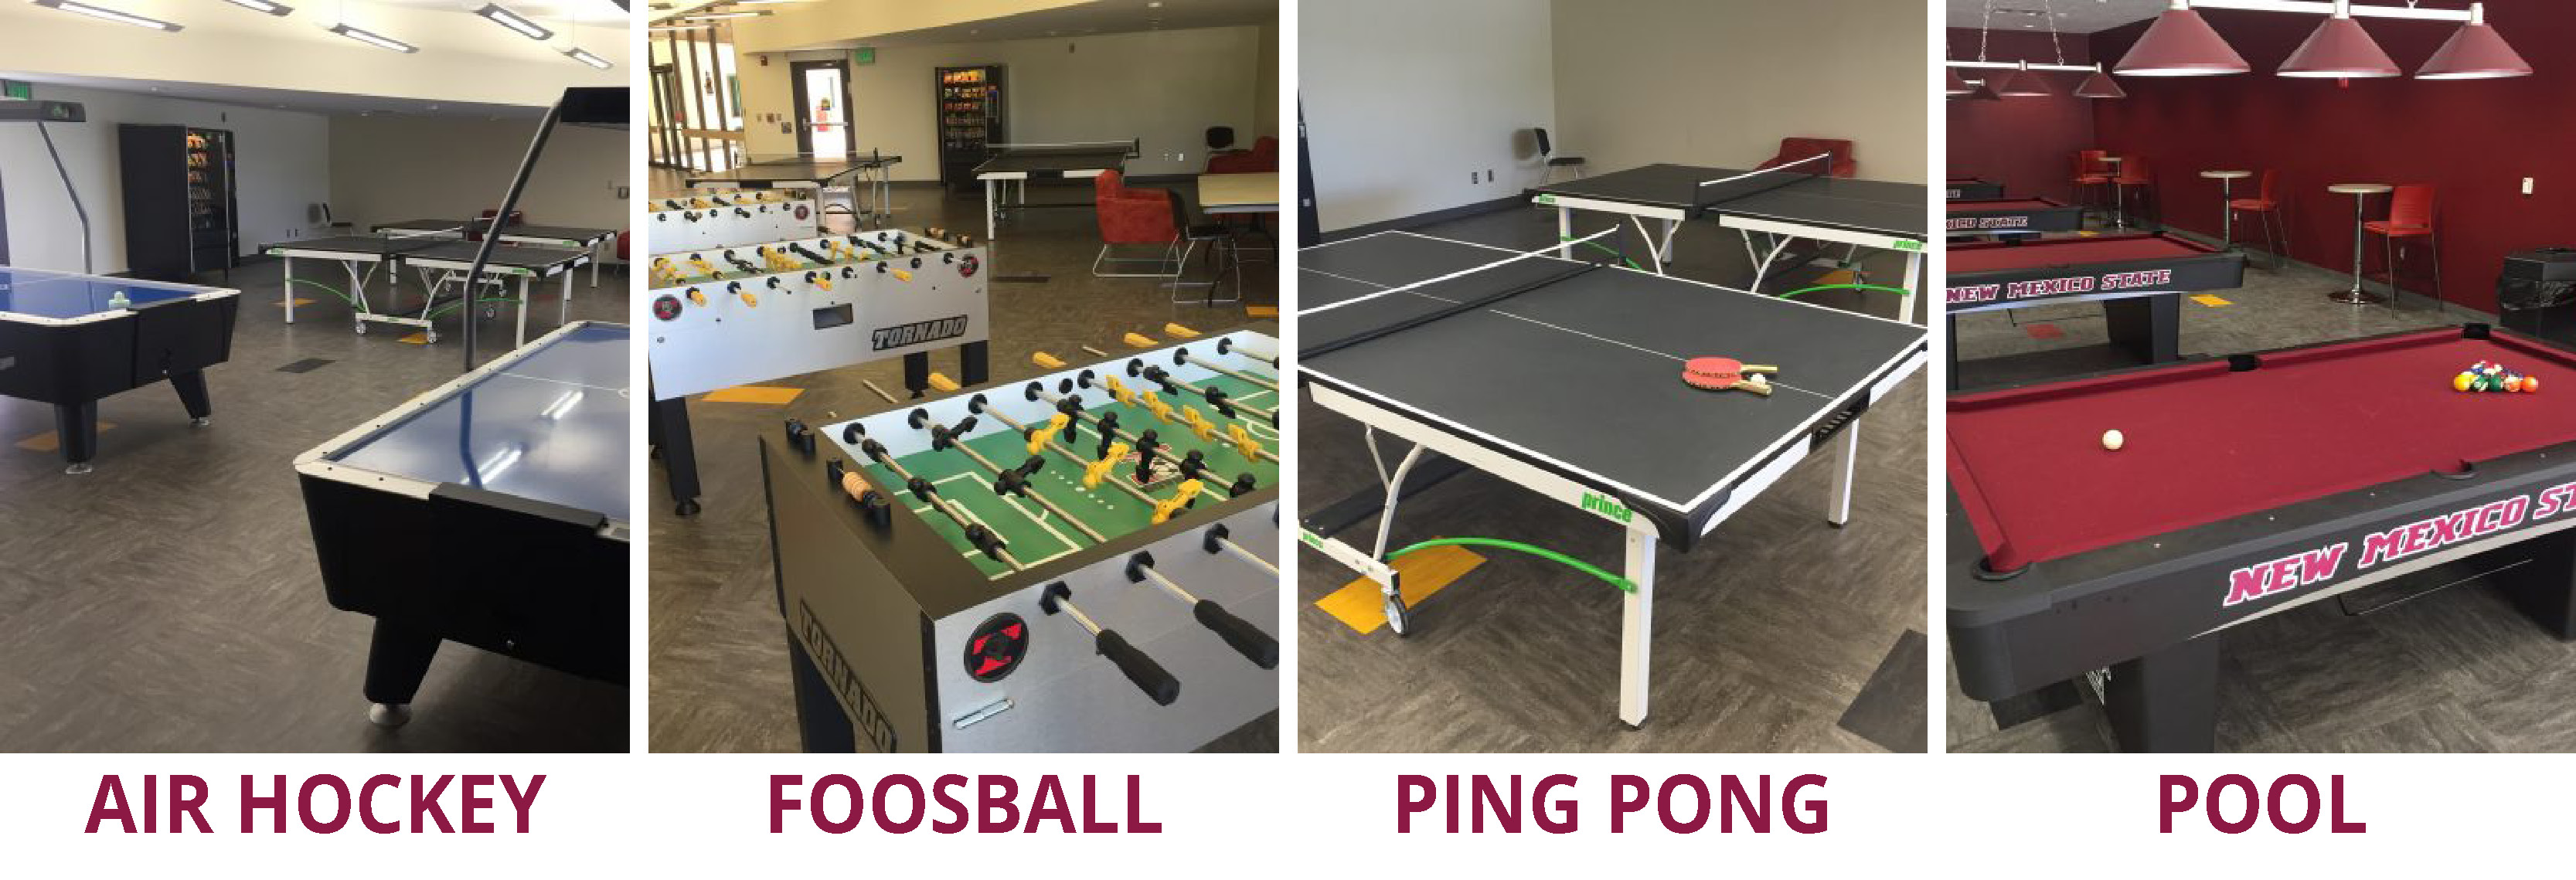 Game Room Images - Air Hockey, Ping Pong, Foosball, Pool